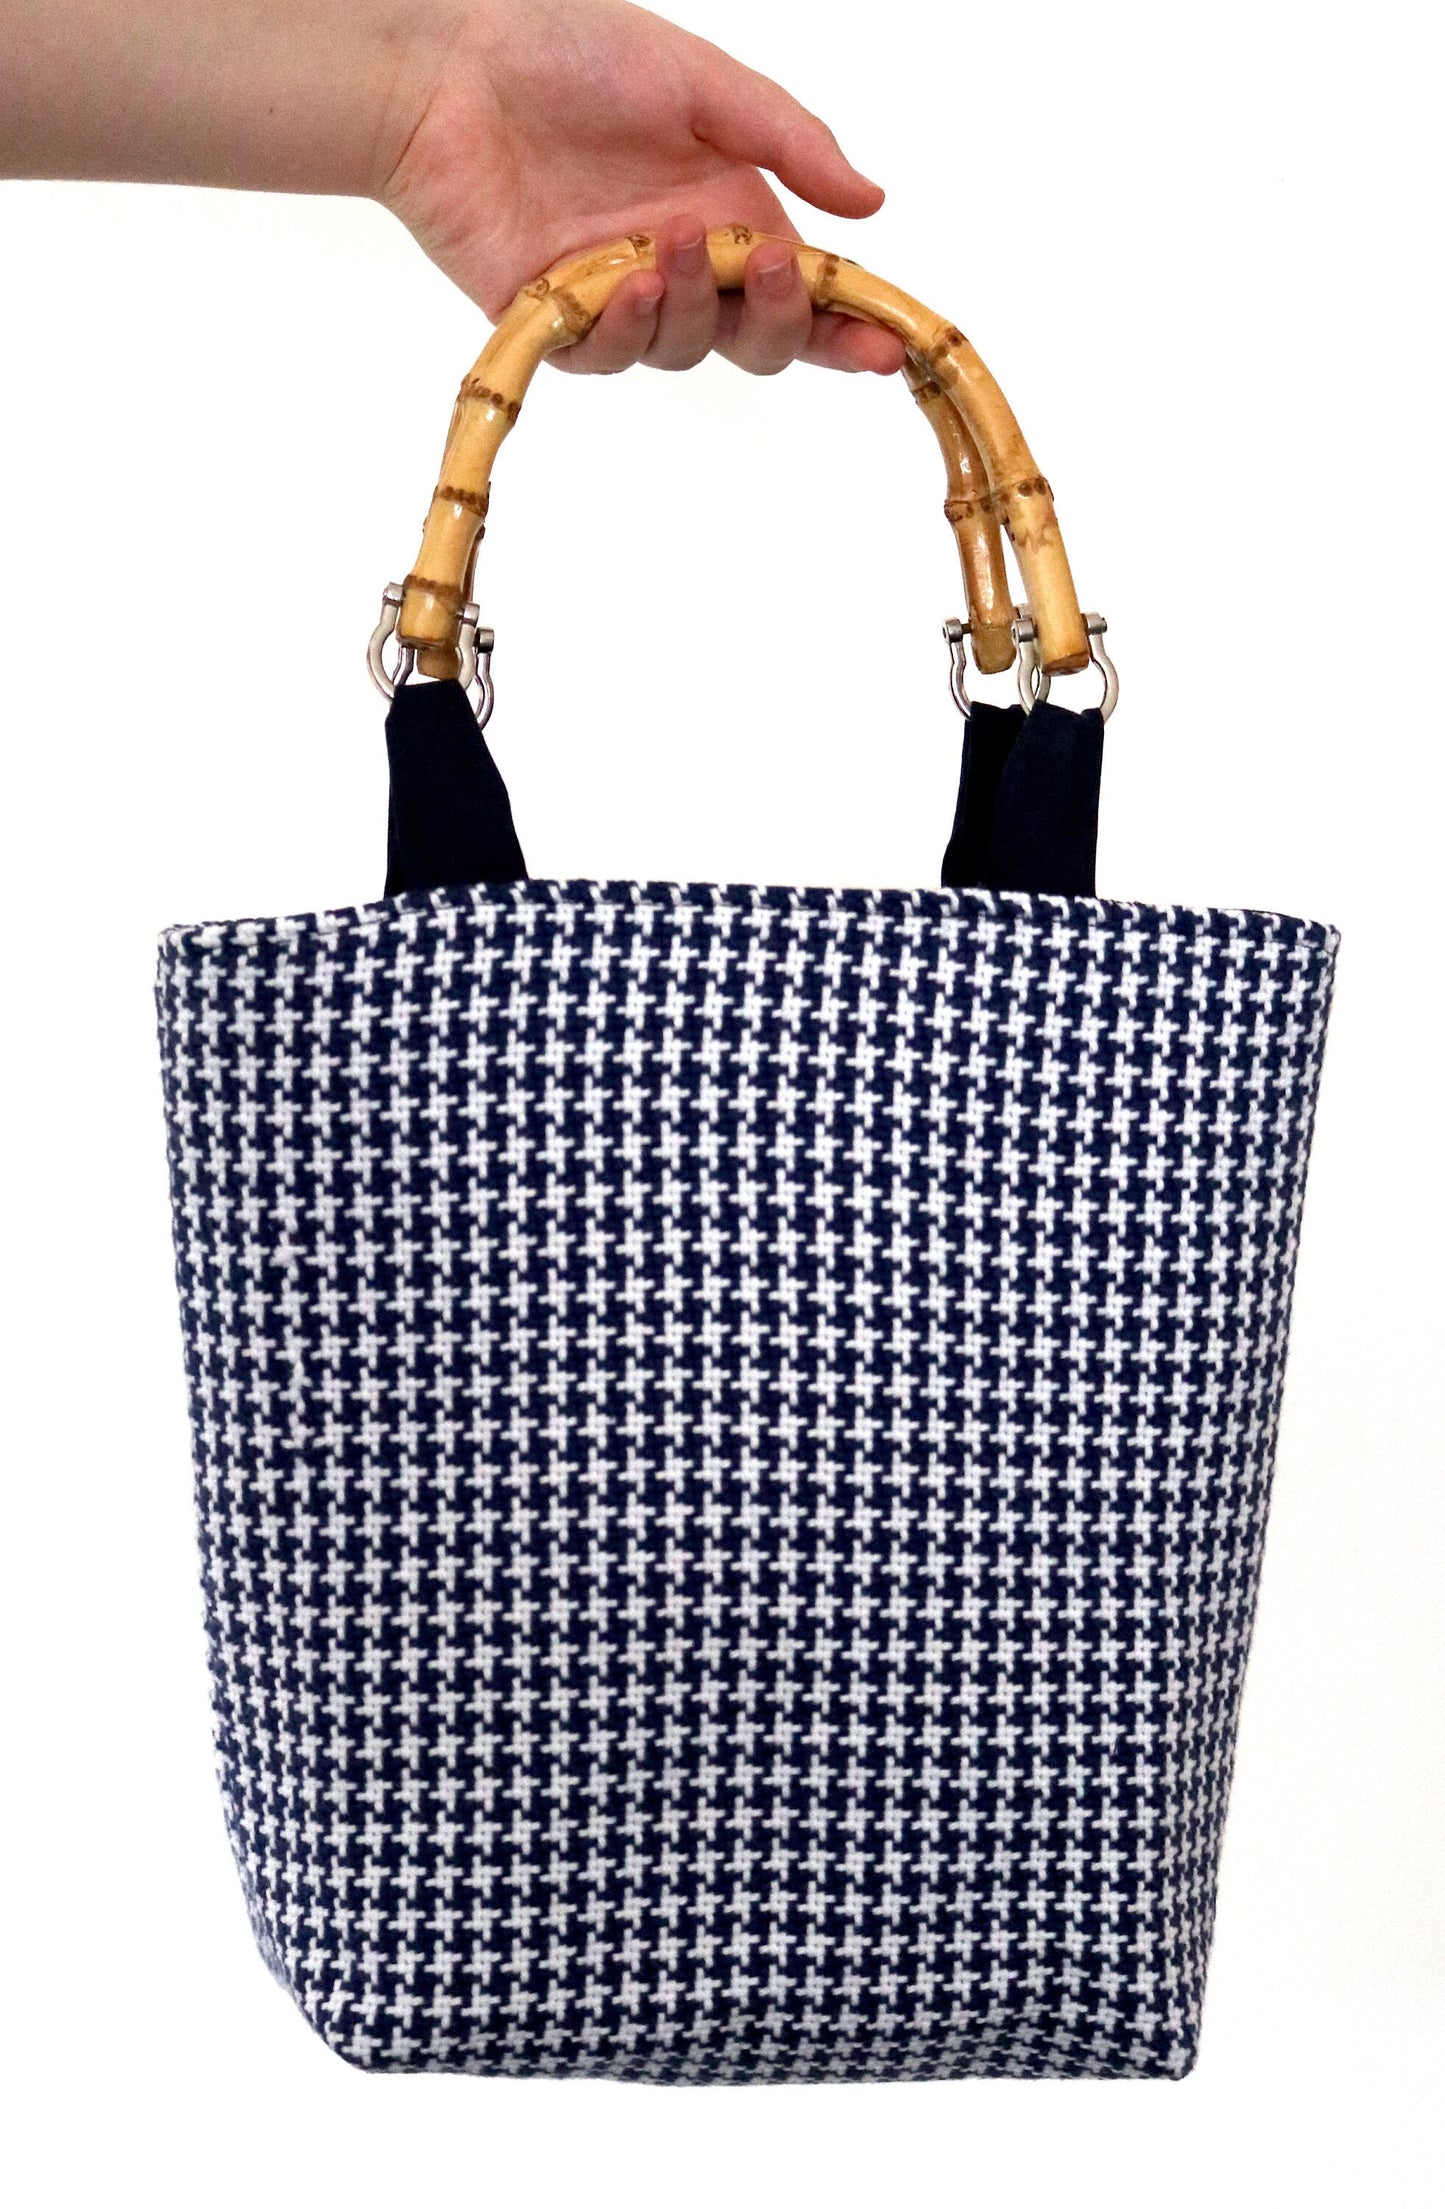 Rigid Heddle Weaving, The Town Bag, PDF pattern, digital download, hand woven bag